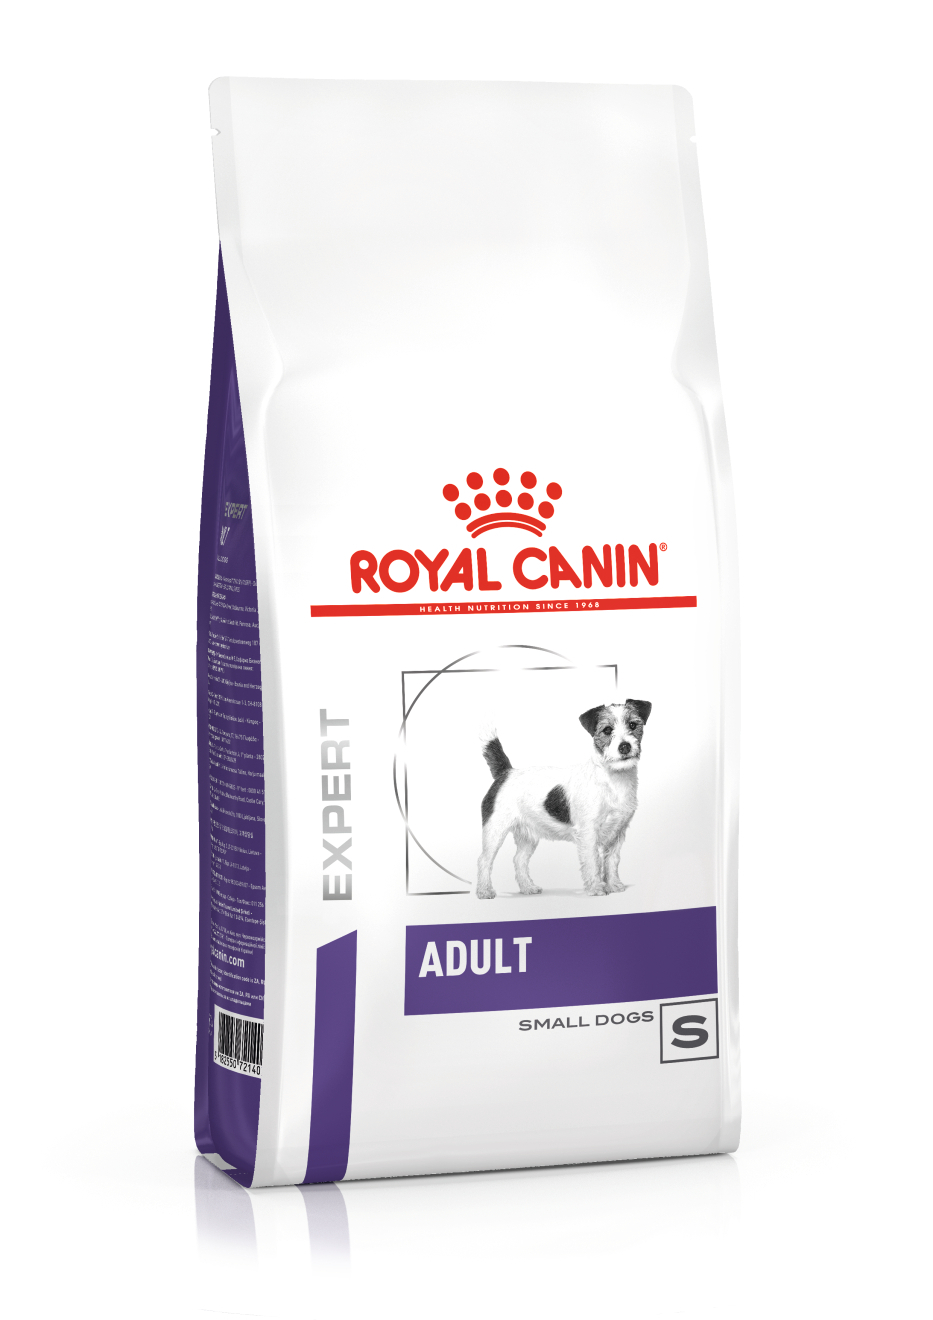 ROYAL CANIN Expert Dog Adult Small para perros pequeños